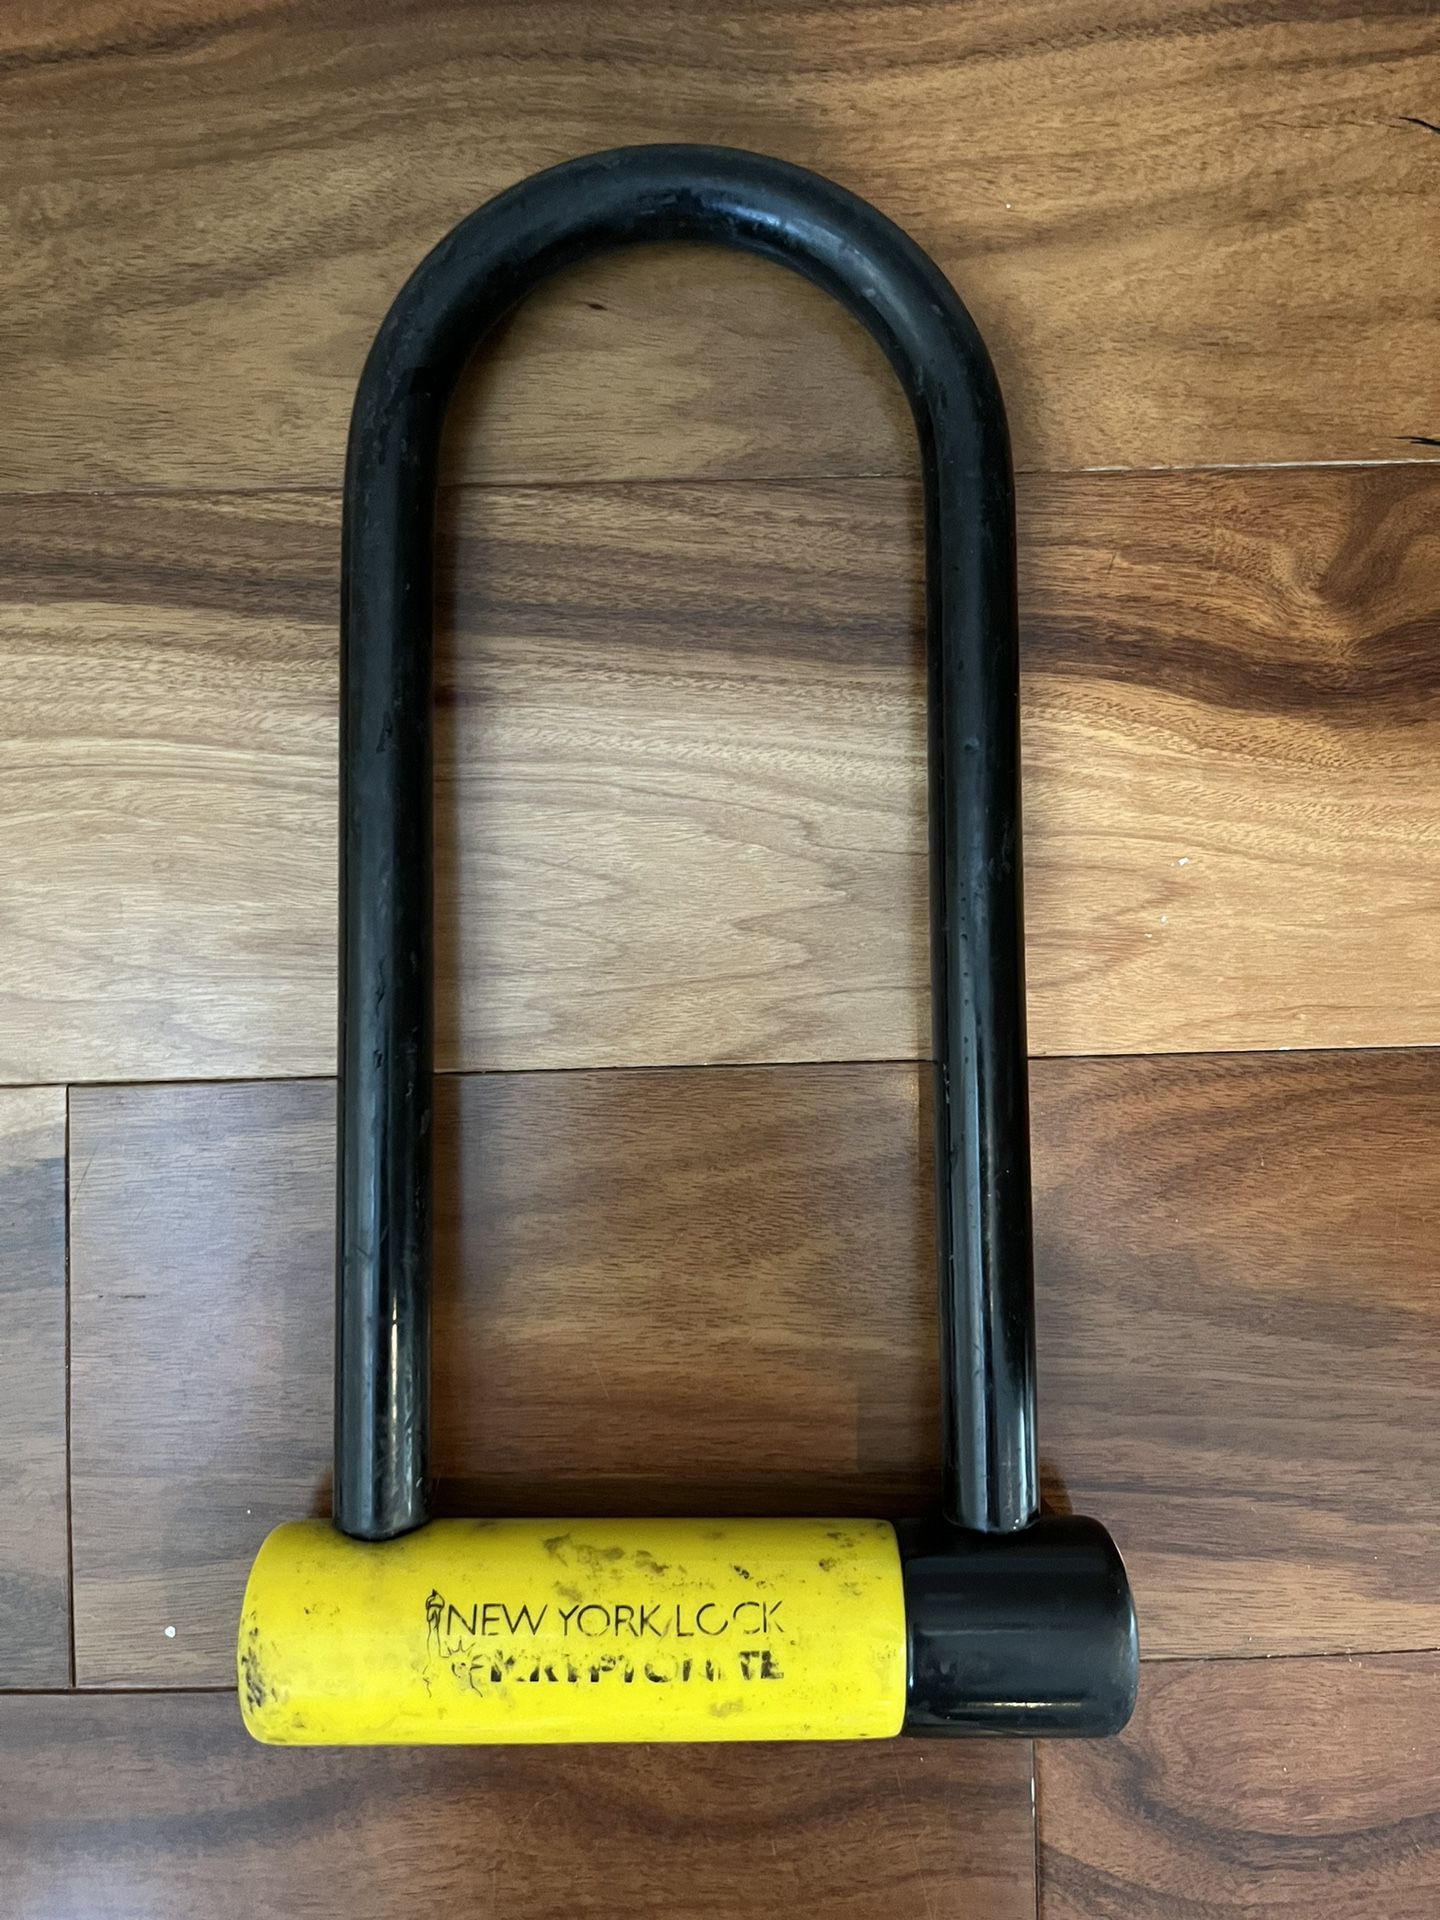 Kryptonite New York LS Bike U-Lock, Heavy Duty Anti-Theft Security Bicycle Lock Sold Secure Gold, 16mm Long Shackle with Keys, Ultimate Security Lock 